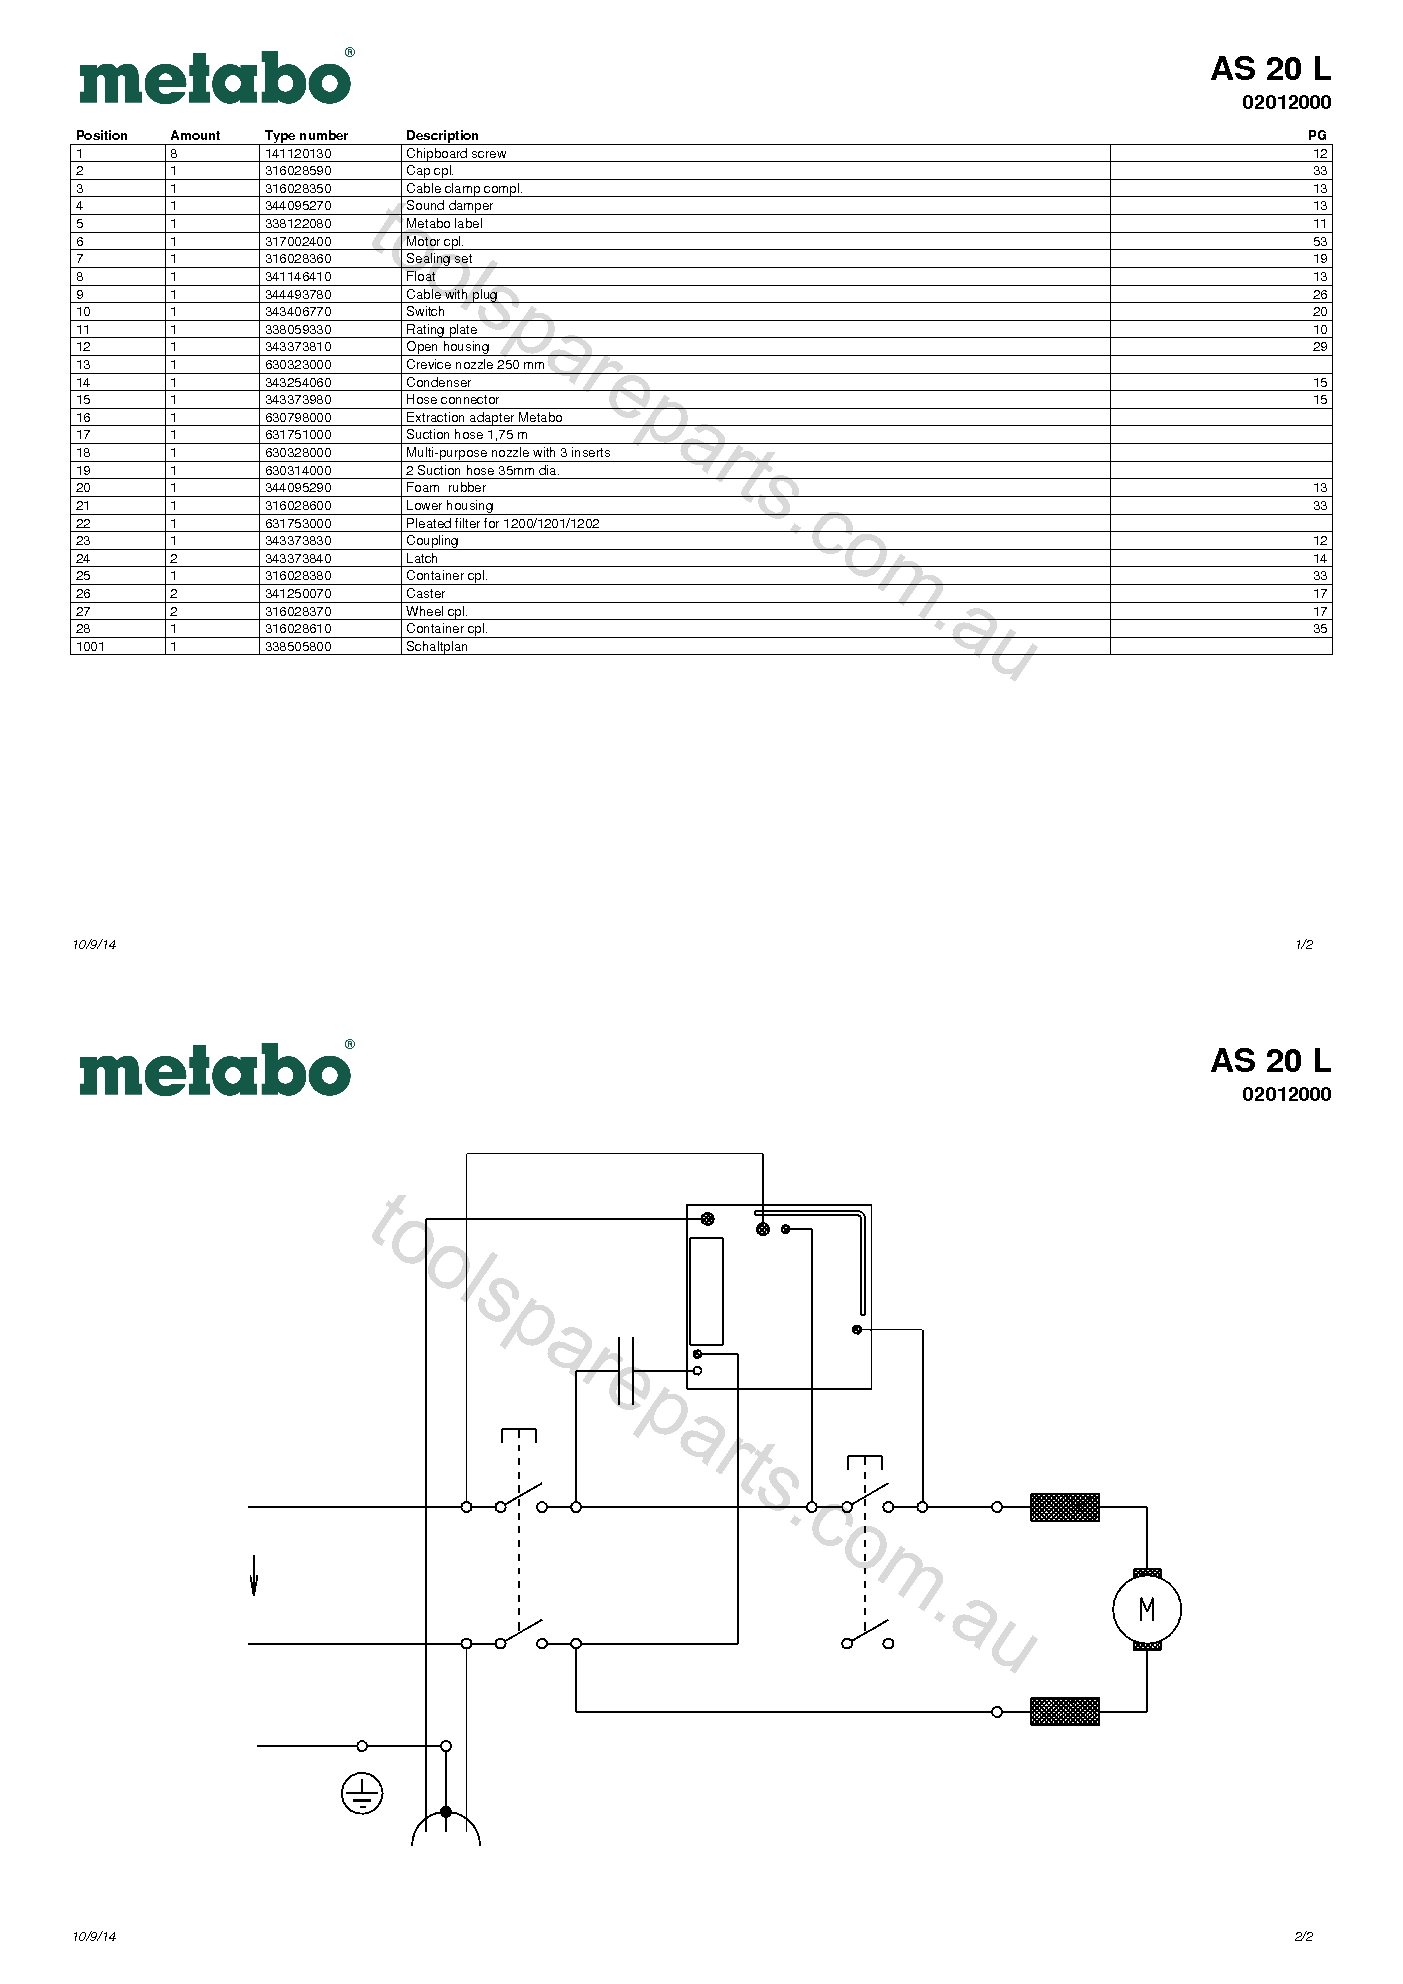 Metabo AS 20 L 02012000  Diagram 1